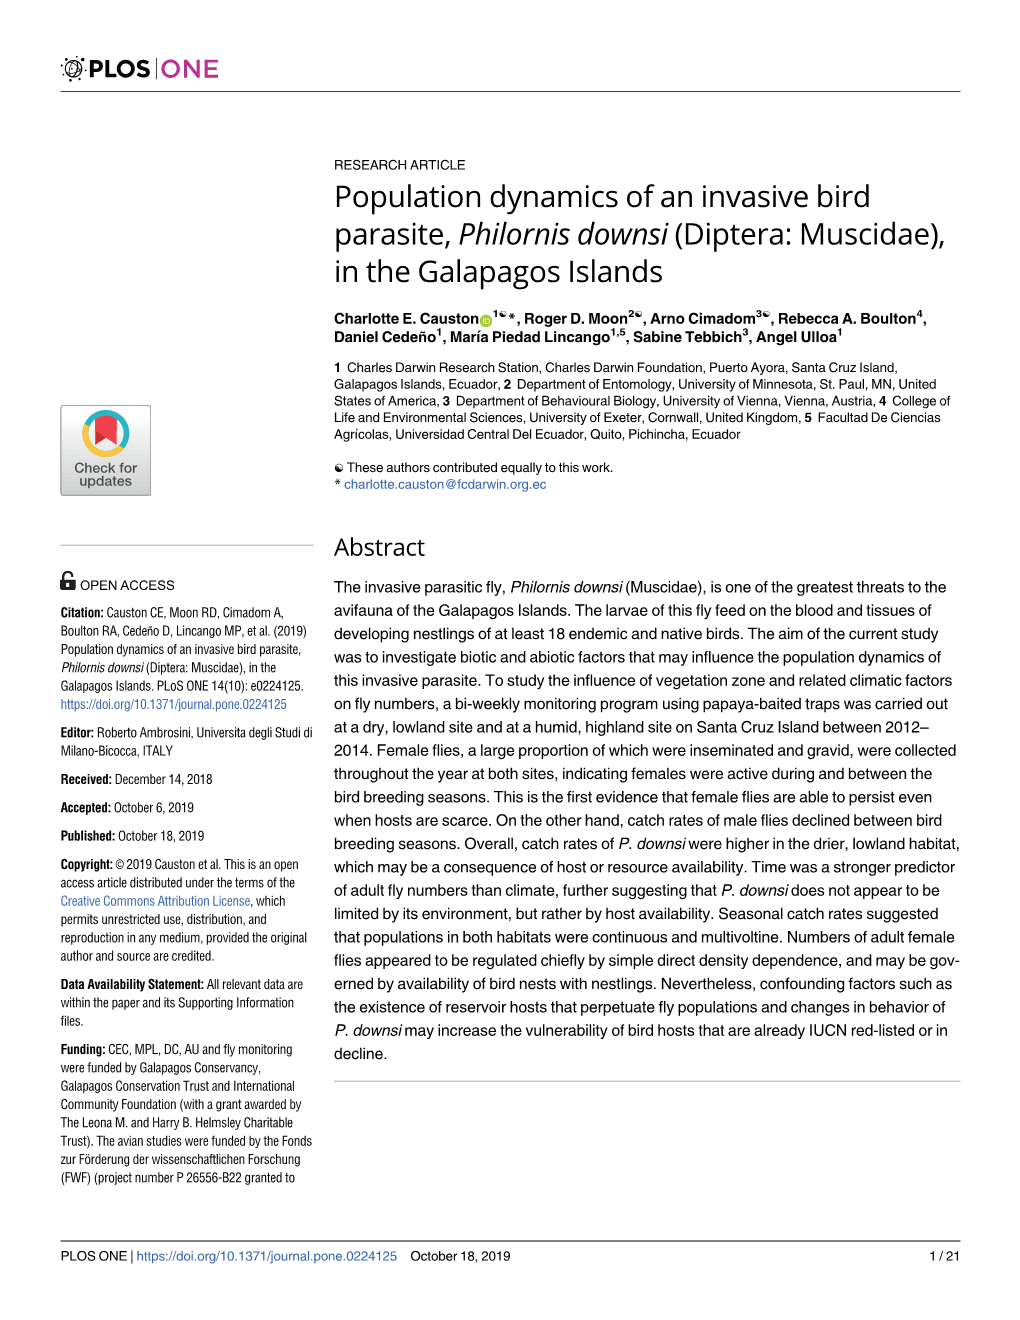 Population Dynamics of an Invasive Bird Parasite, Philornis Downsi (Diptera: Muscidae), in the Galapagos Islands